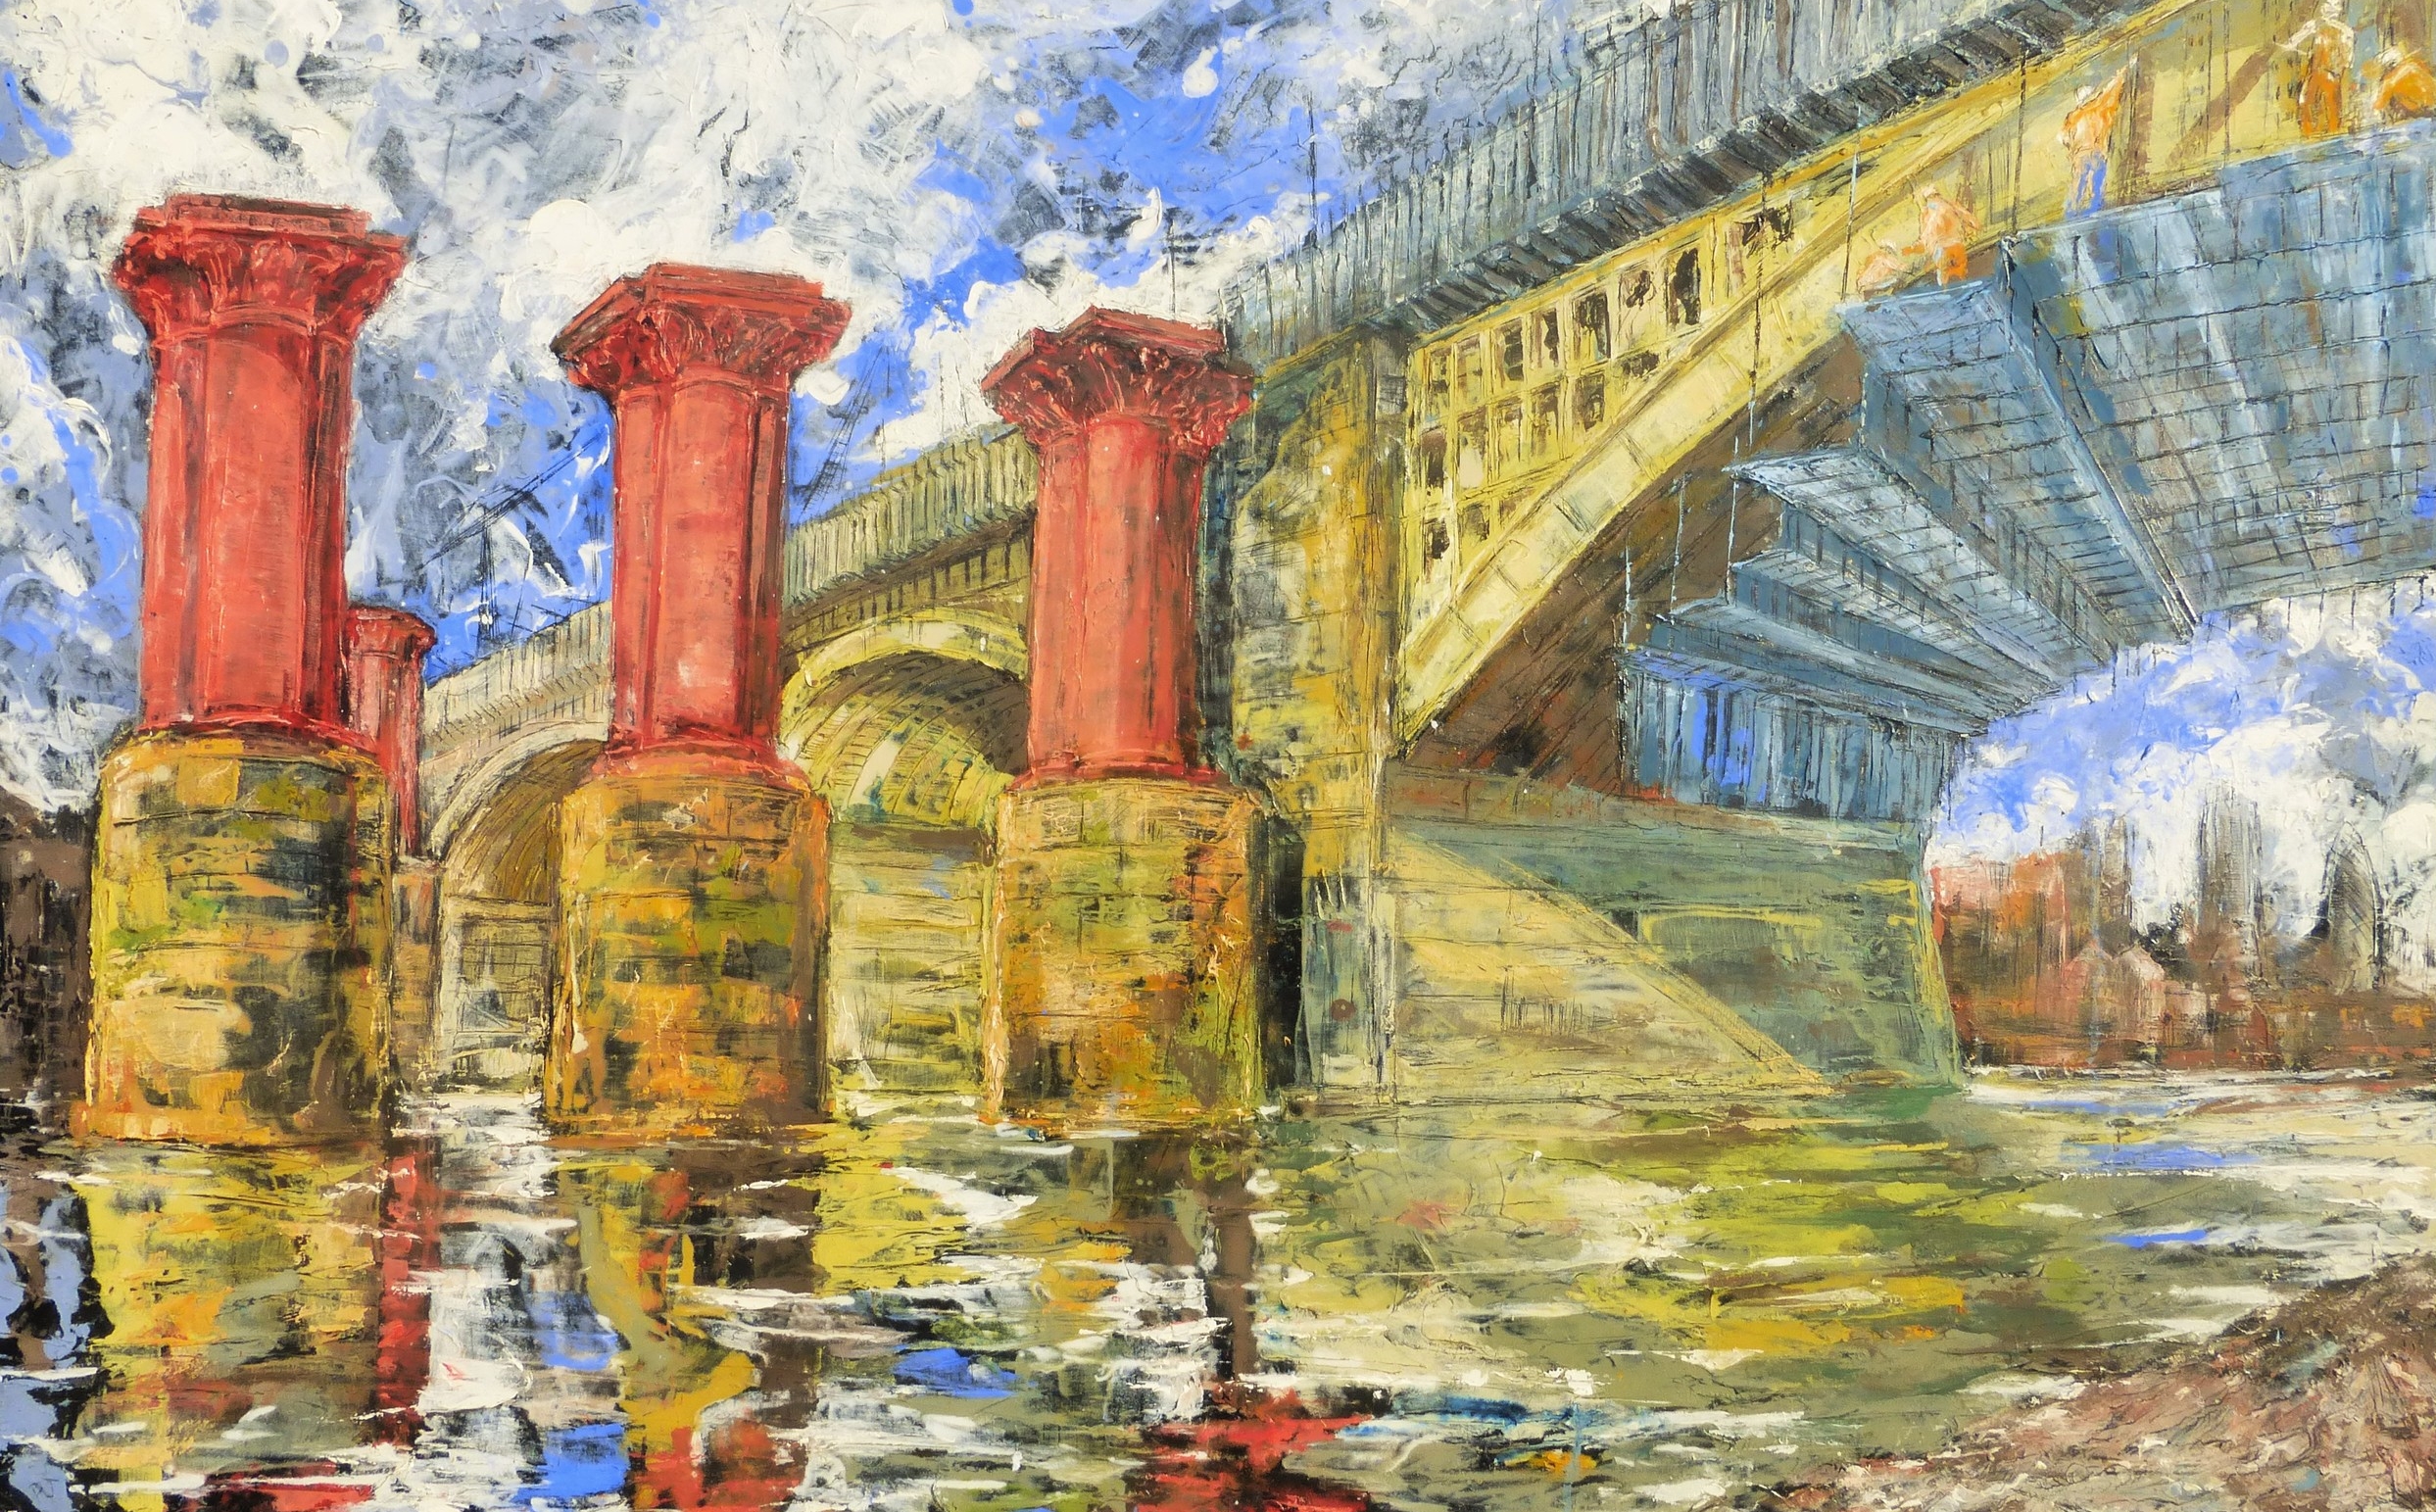 Blackfriars Bridge, Thames, London. Oil on canvas